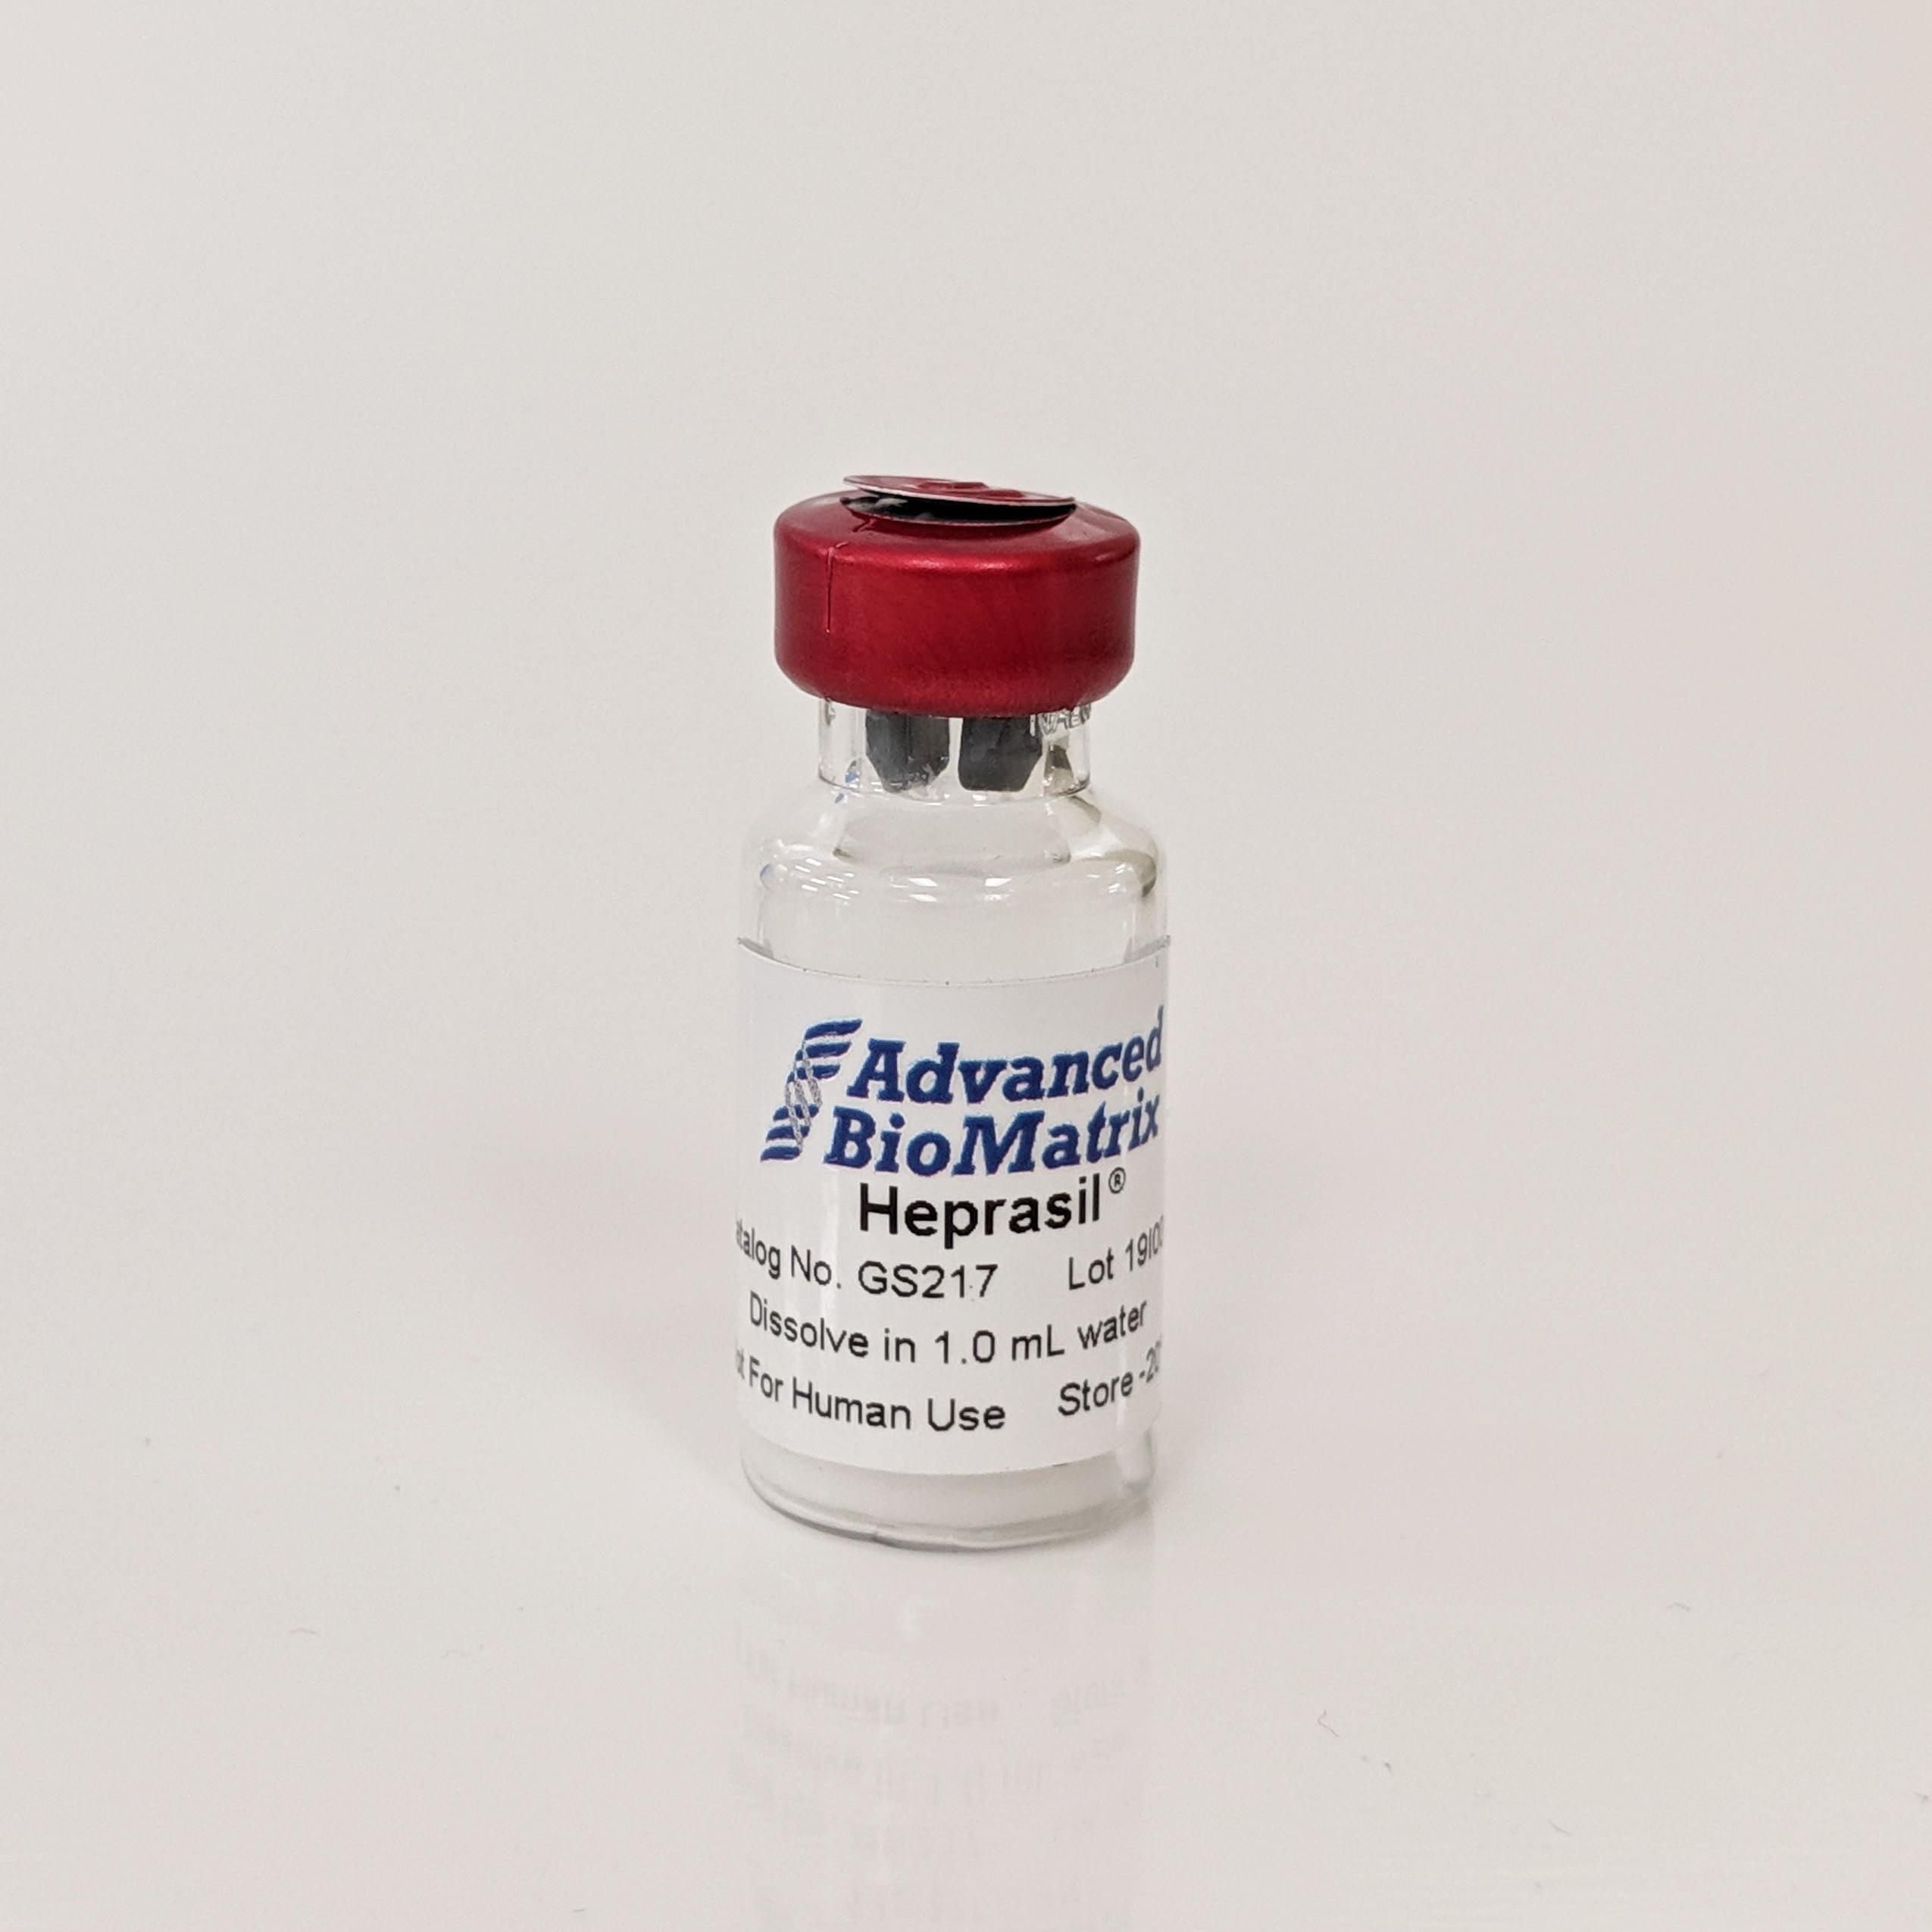 heprasil thiolated heparin and hyaluronic acid from advanced biomatrix